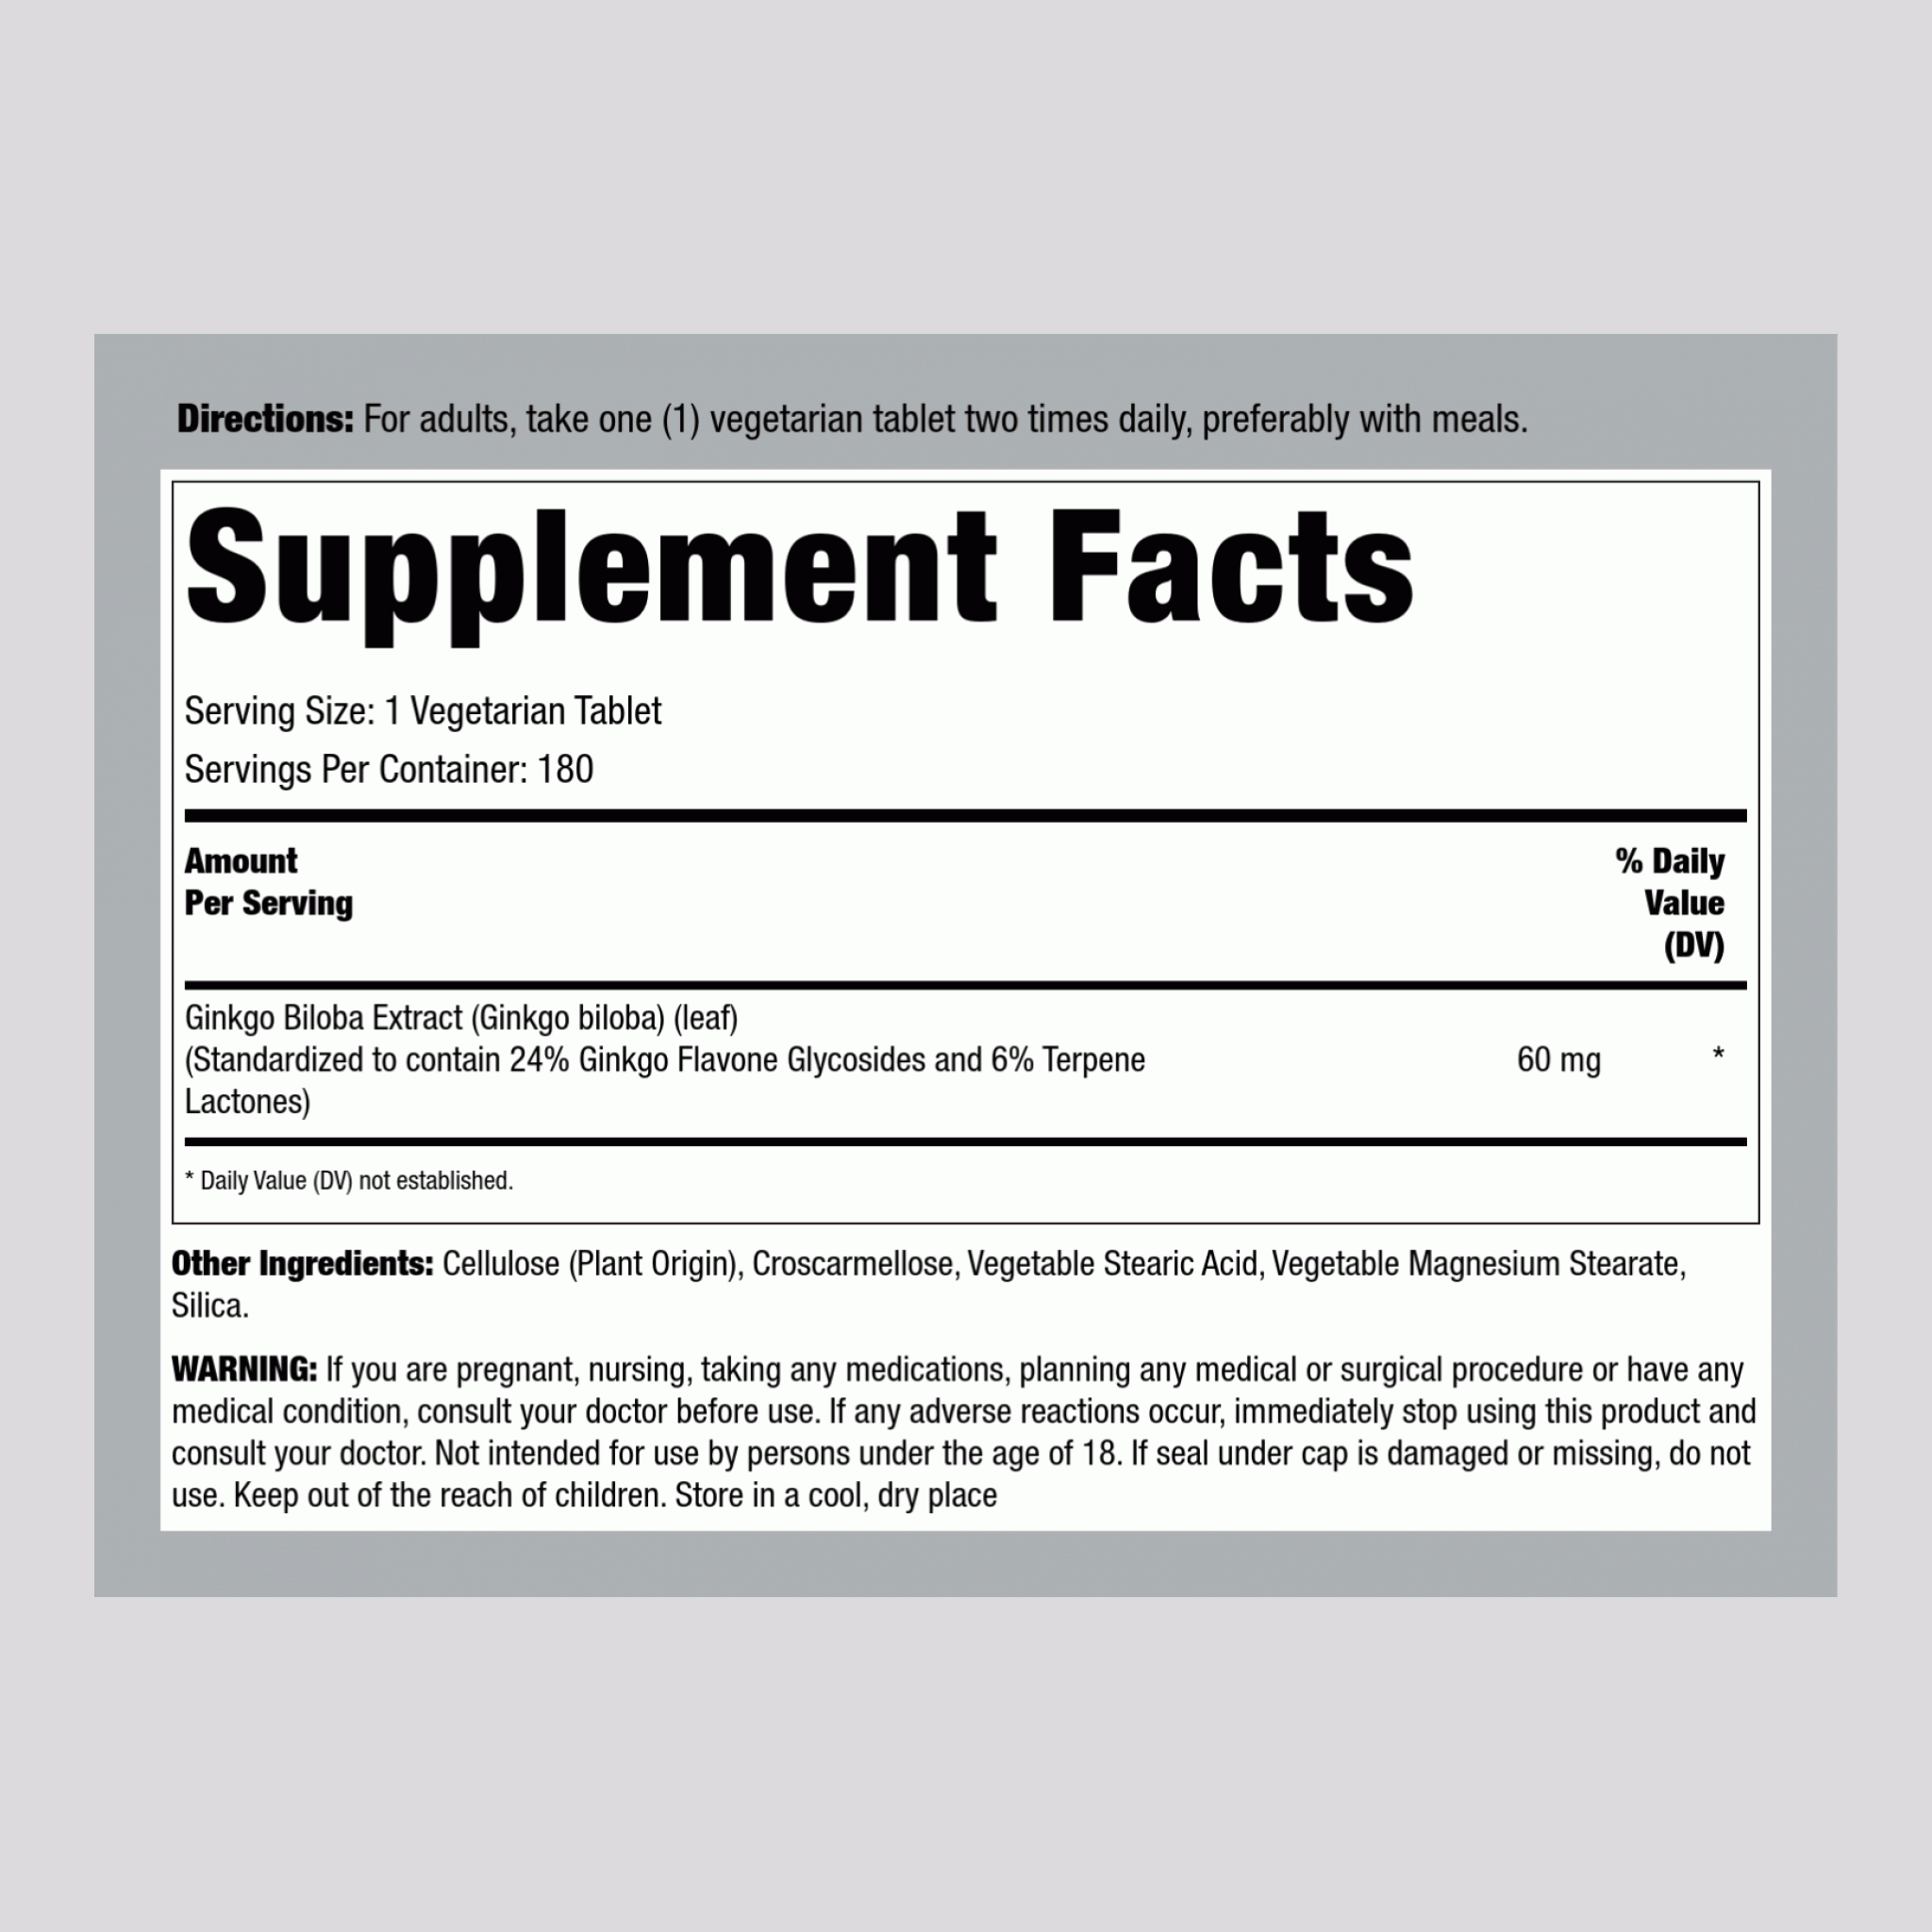 Ginkgo Biloba Standardized Extract, 60 mg, 180 Tablets